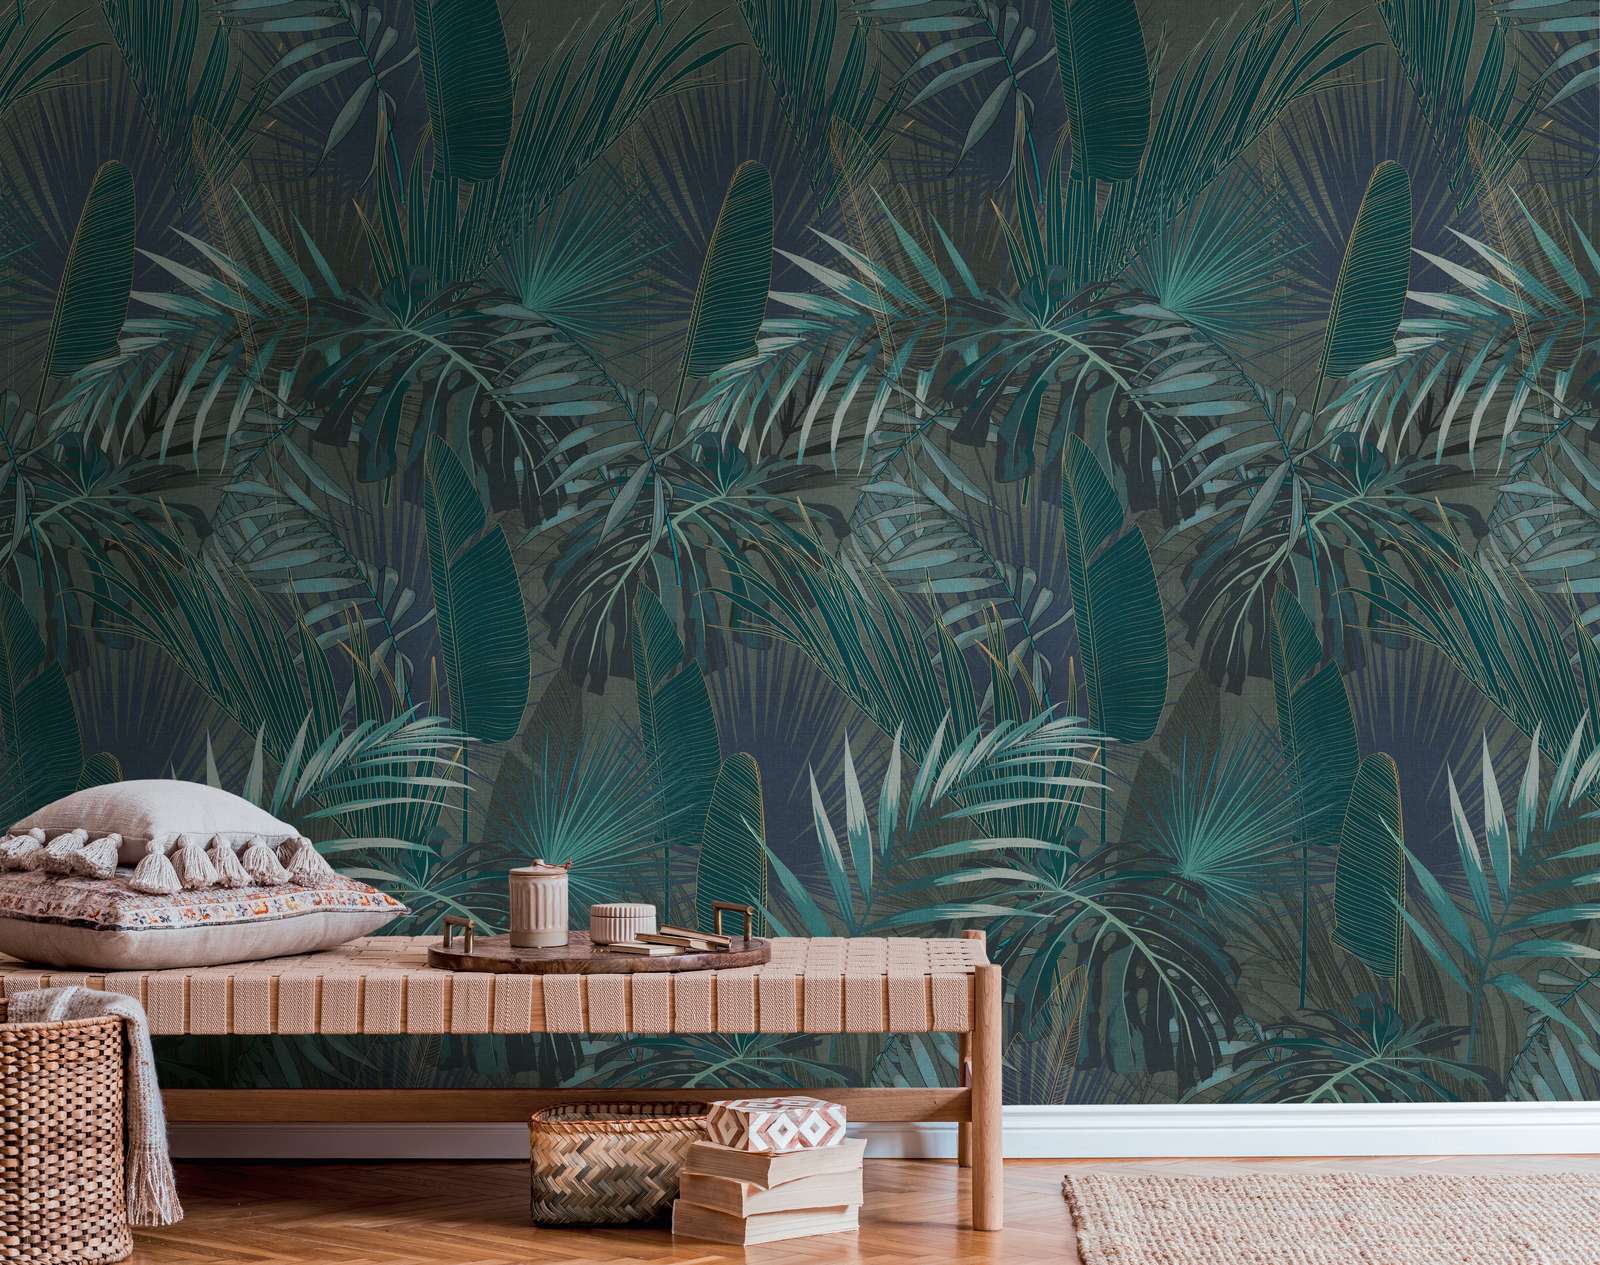             Wallpaper with jungle leaves motif - petrol, blue, green
        